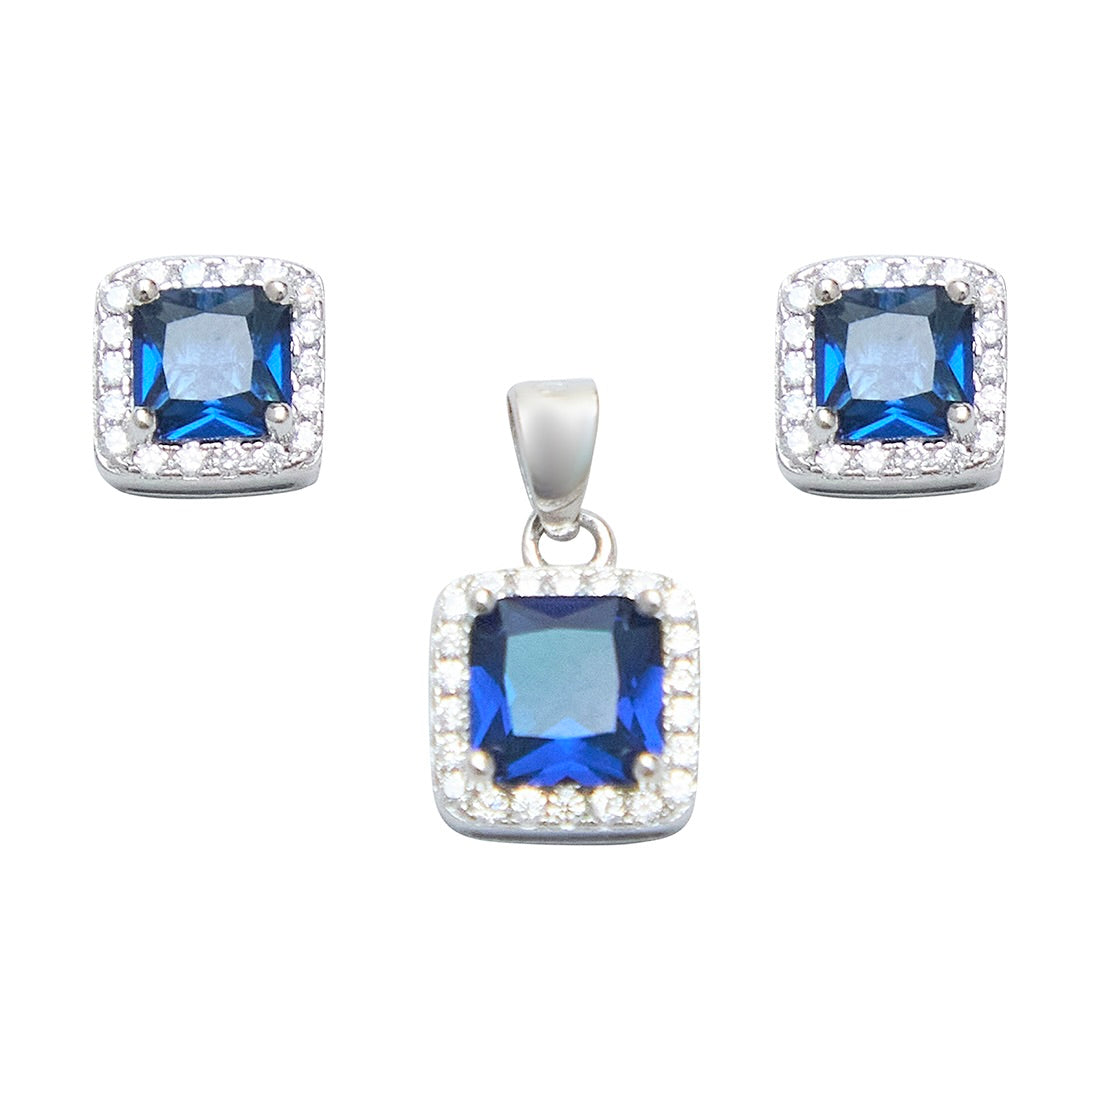 Silver Multicoloured Stone Square Pendant and Earrings Set